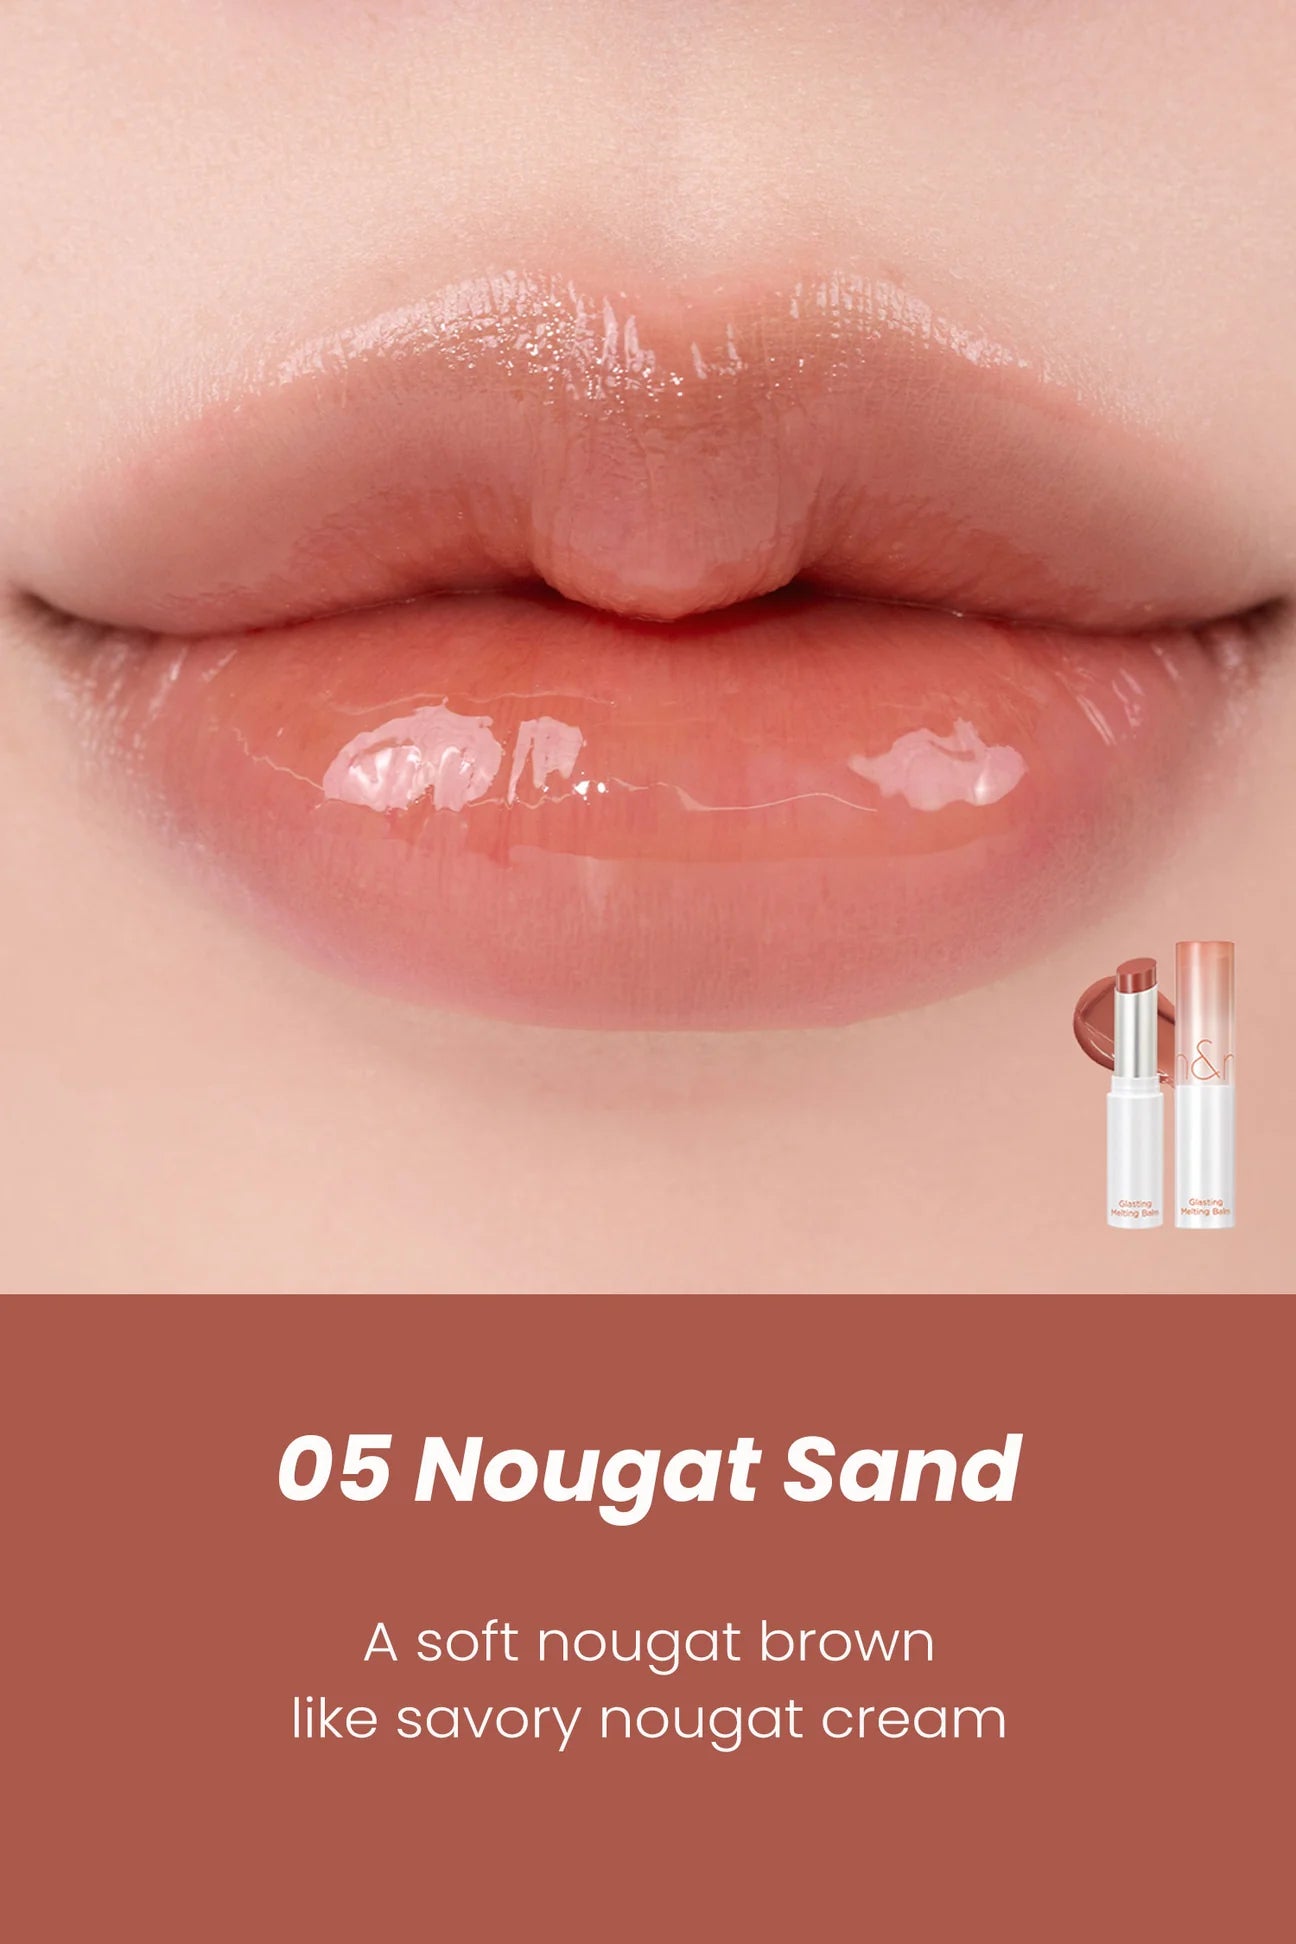 ROMAND - Glasting Melting Balm - 05 Nougat Sand